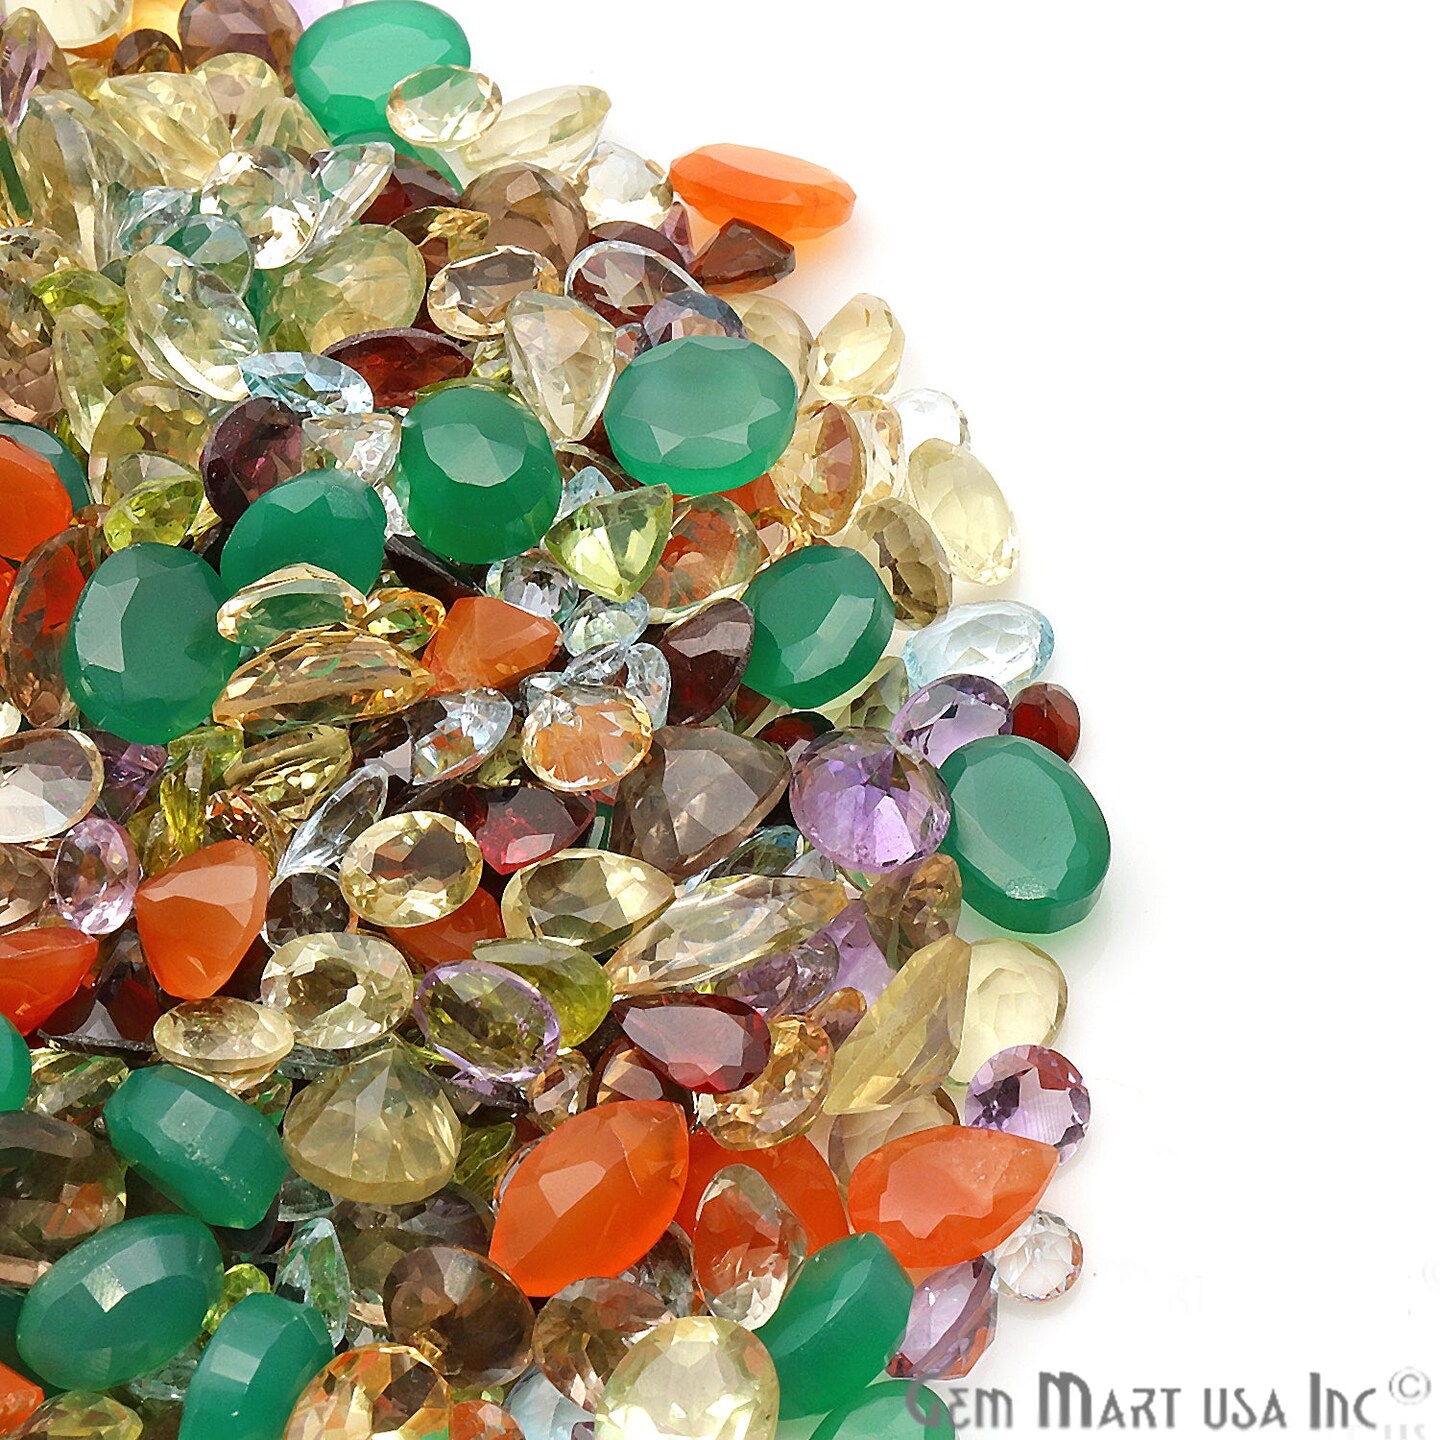 Mixed Gems, 50 Carat Lot Loose Gemstones, 100% Natural Wholesale